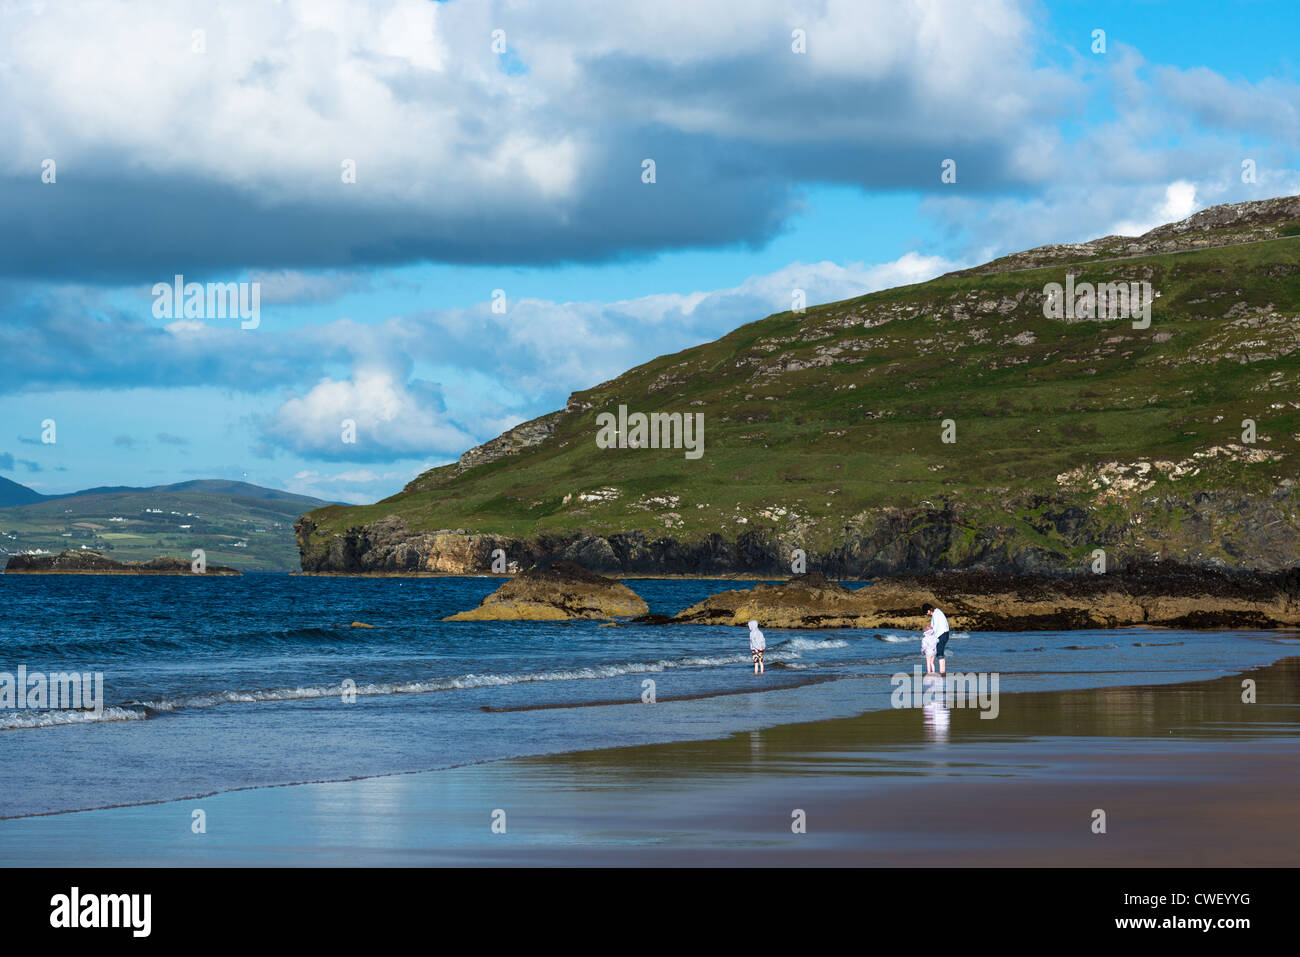 Stocker Strand, Portsalon on Ballymastocker Bay, Donegal, Ireland.=== High Resolution image using Carl Zeiss Lens === Stock Photo